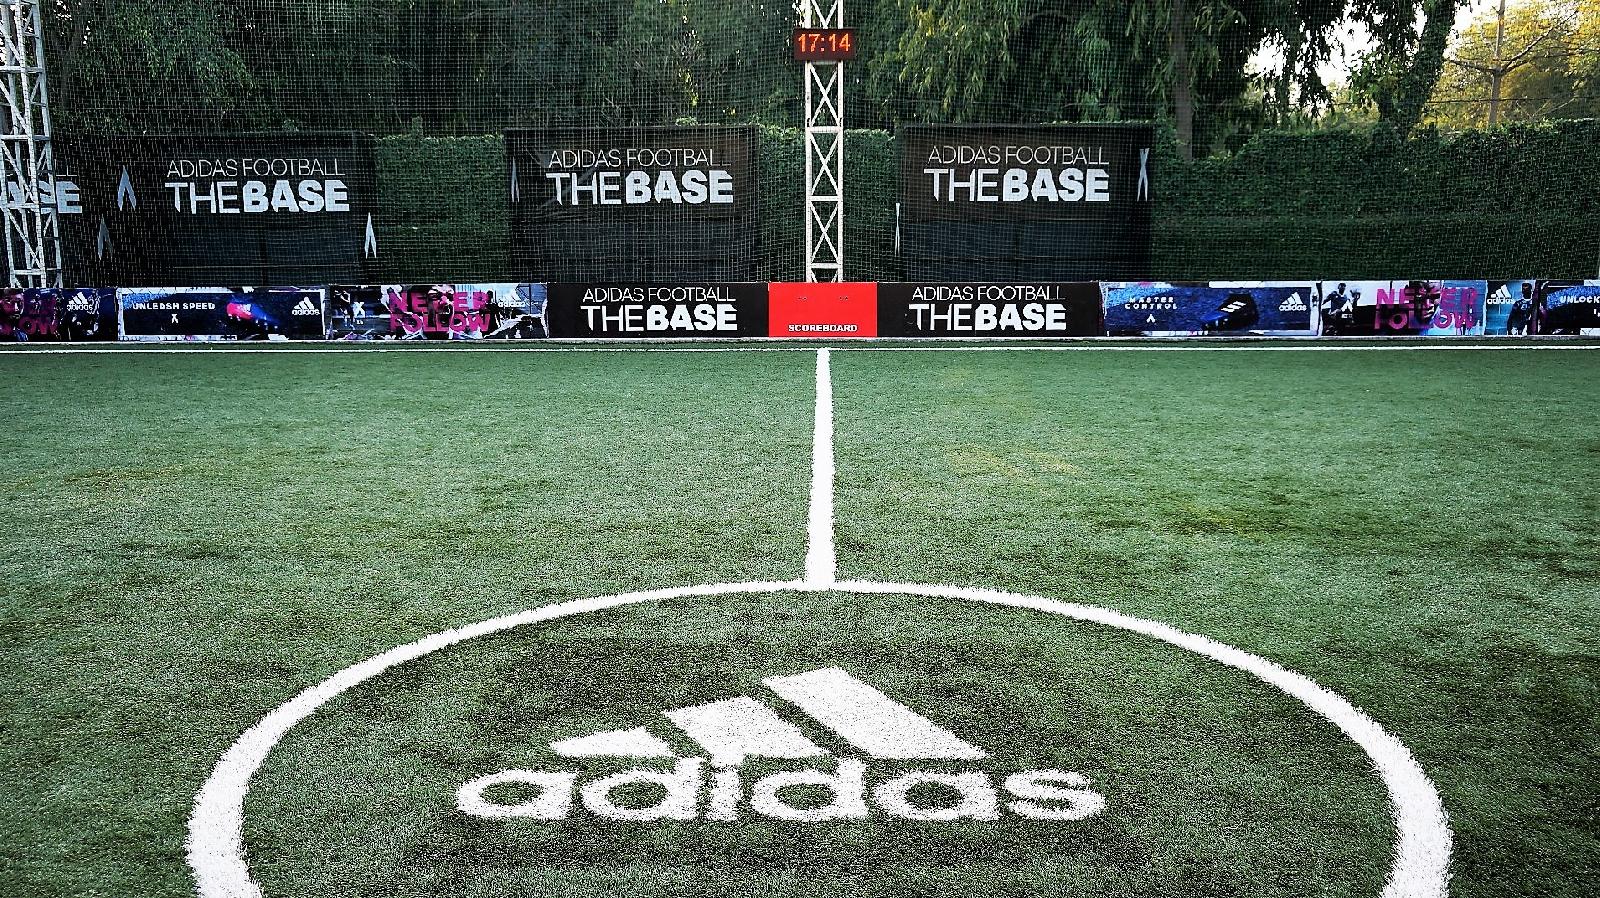 adidas football the base